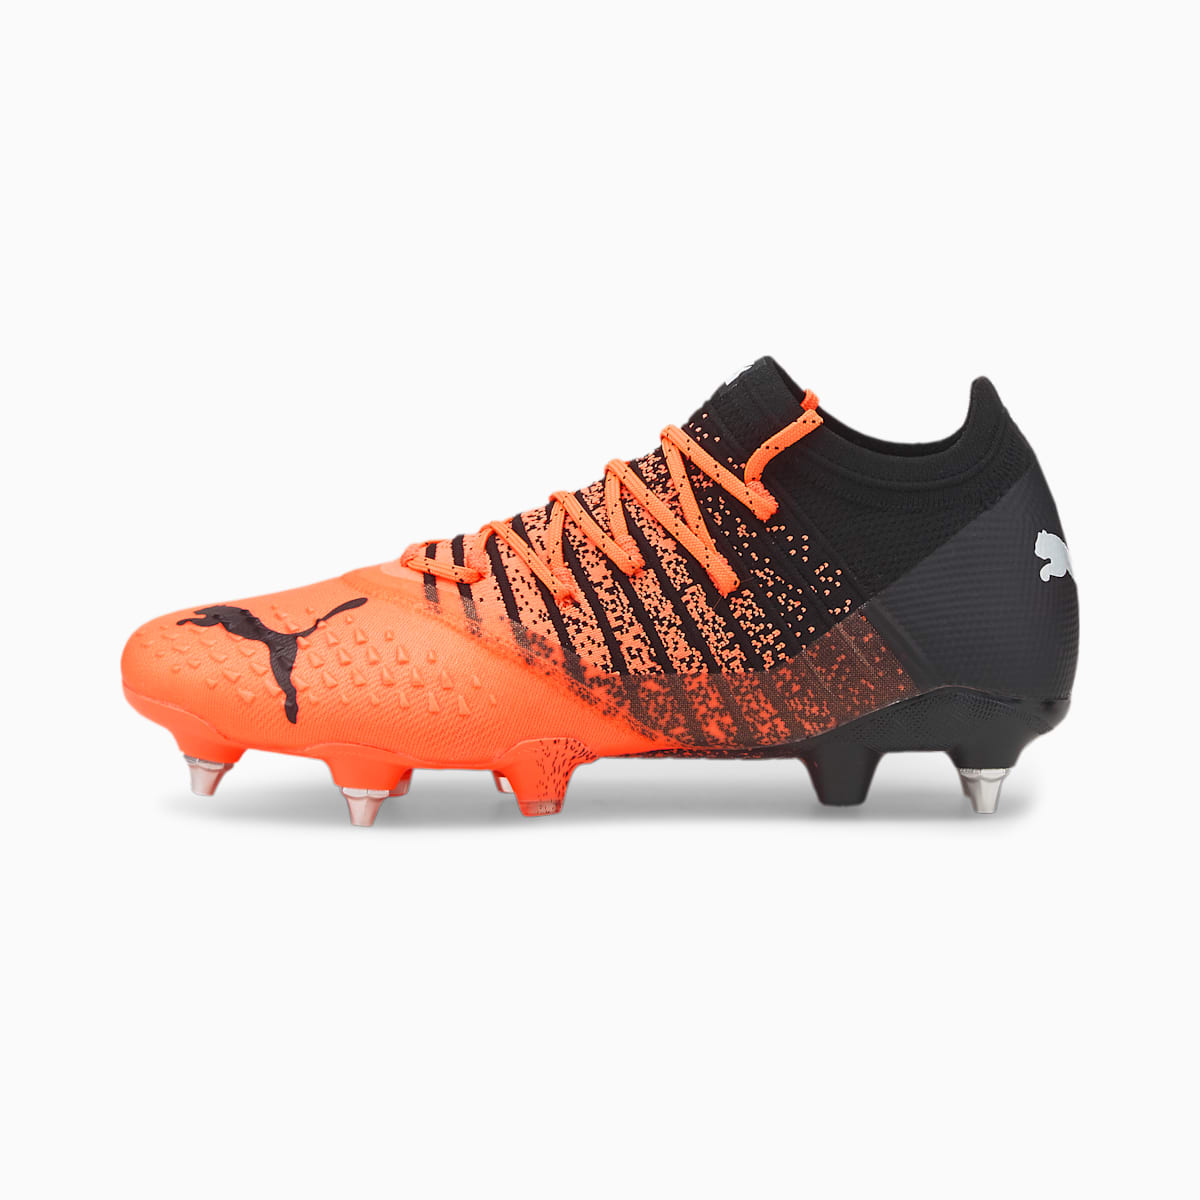 FUTURE 1.3 MxSG Men's Football Boots